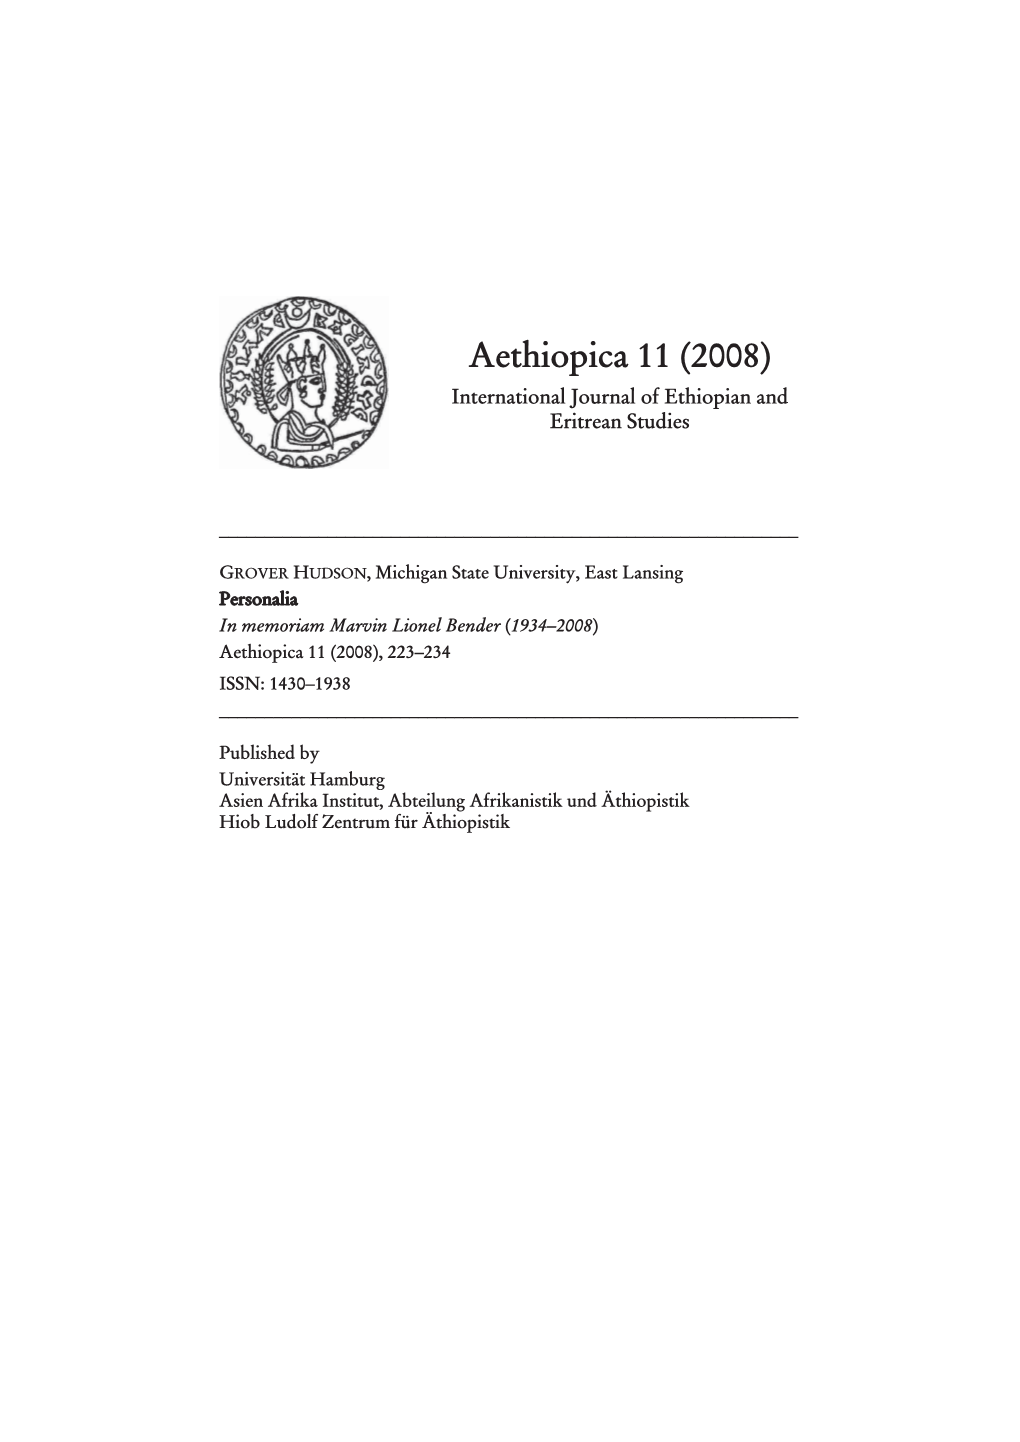 Aethiopica 11 (2008) International Journal of Ethiopian and Eritrean Studies